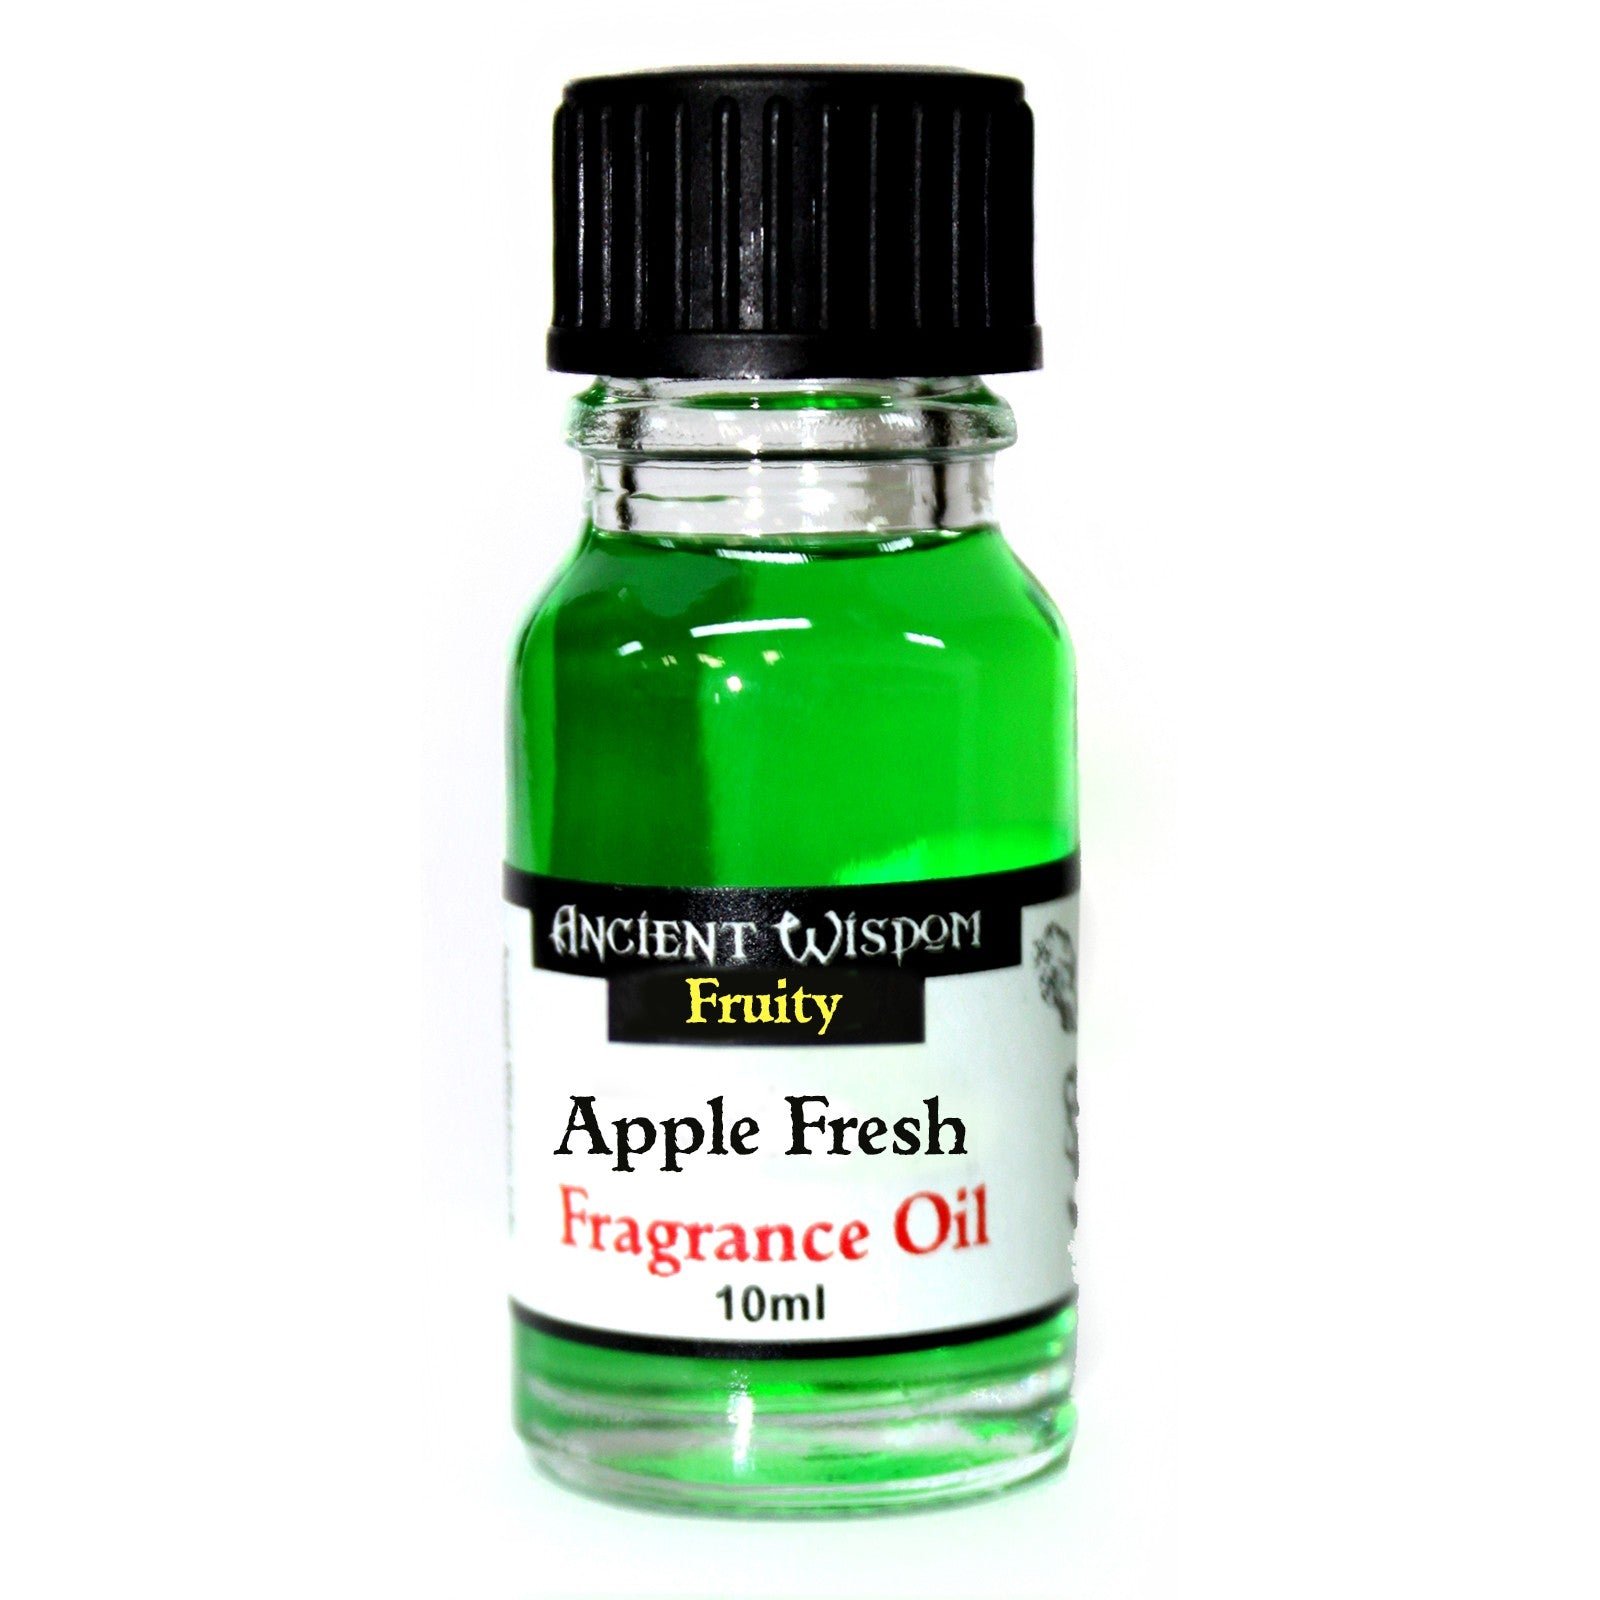 View 10ml AppleFresh Fragrance Oil information